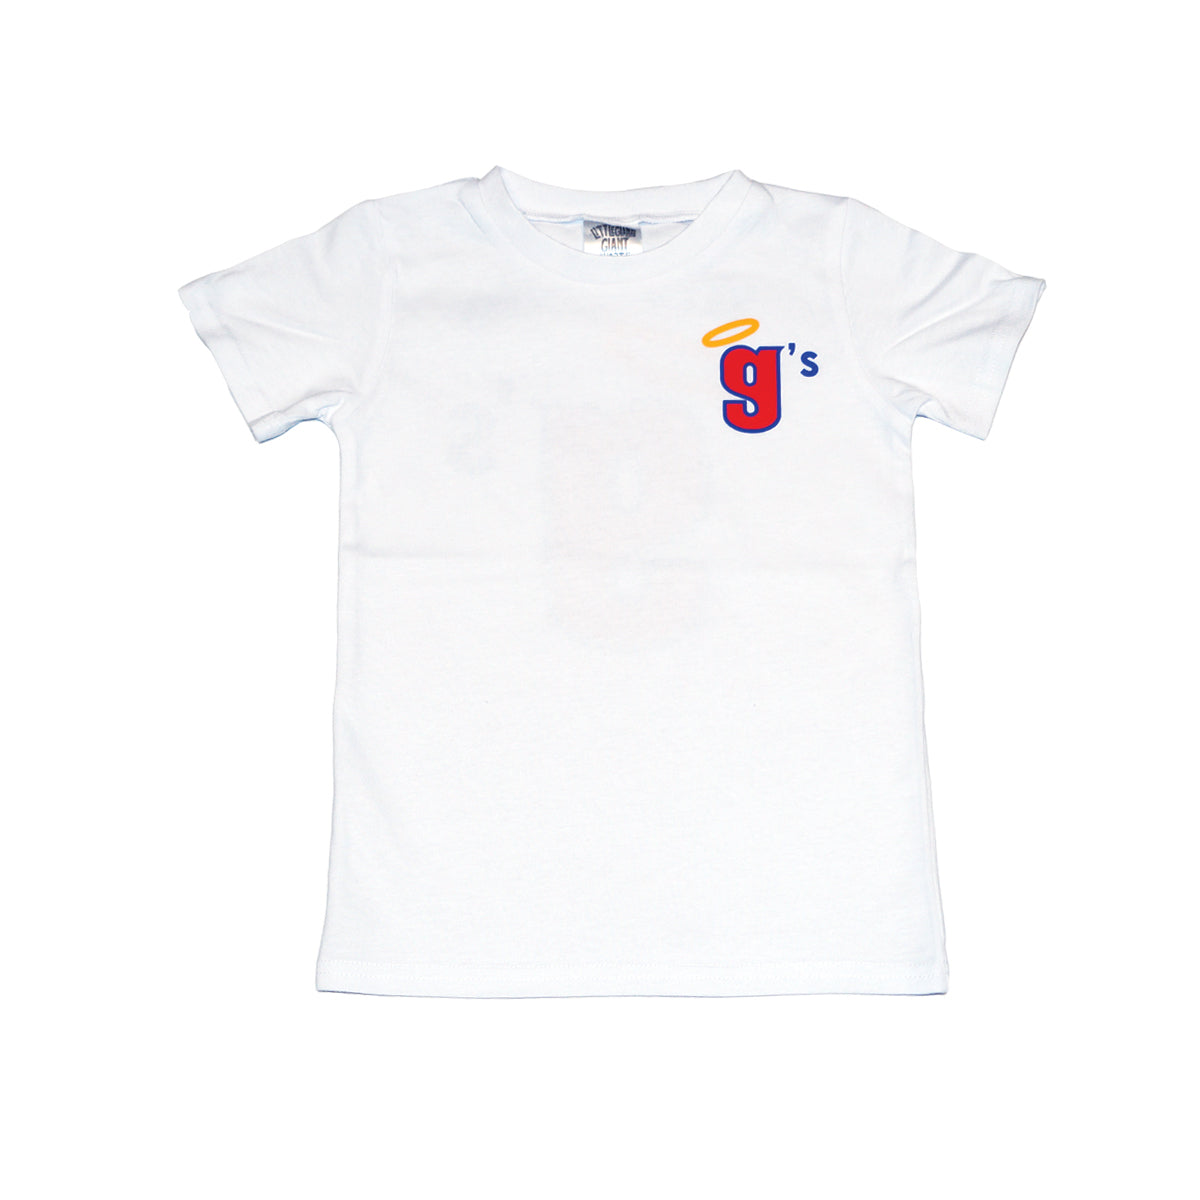 Halo Little g's T-shirt (White)